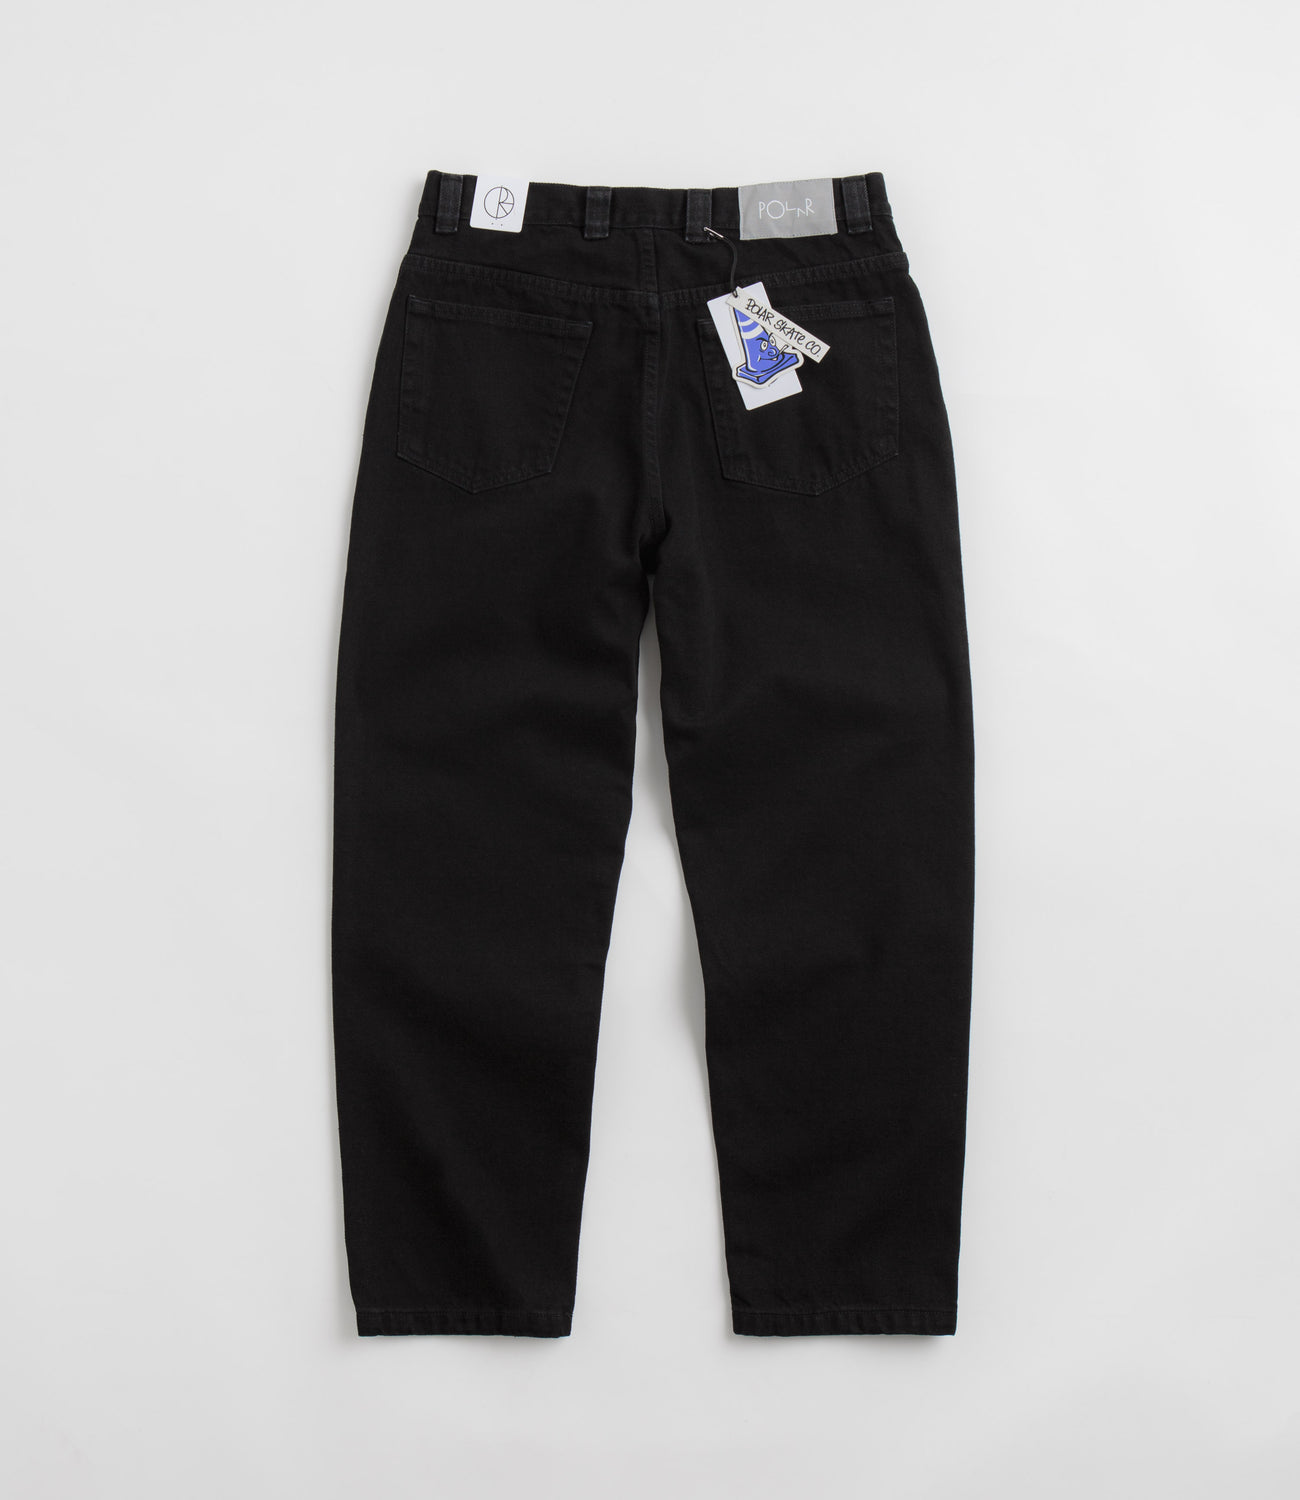 Polar '92 Denim Jeans - Pitch Black | Flatspot